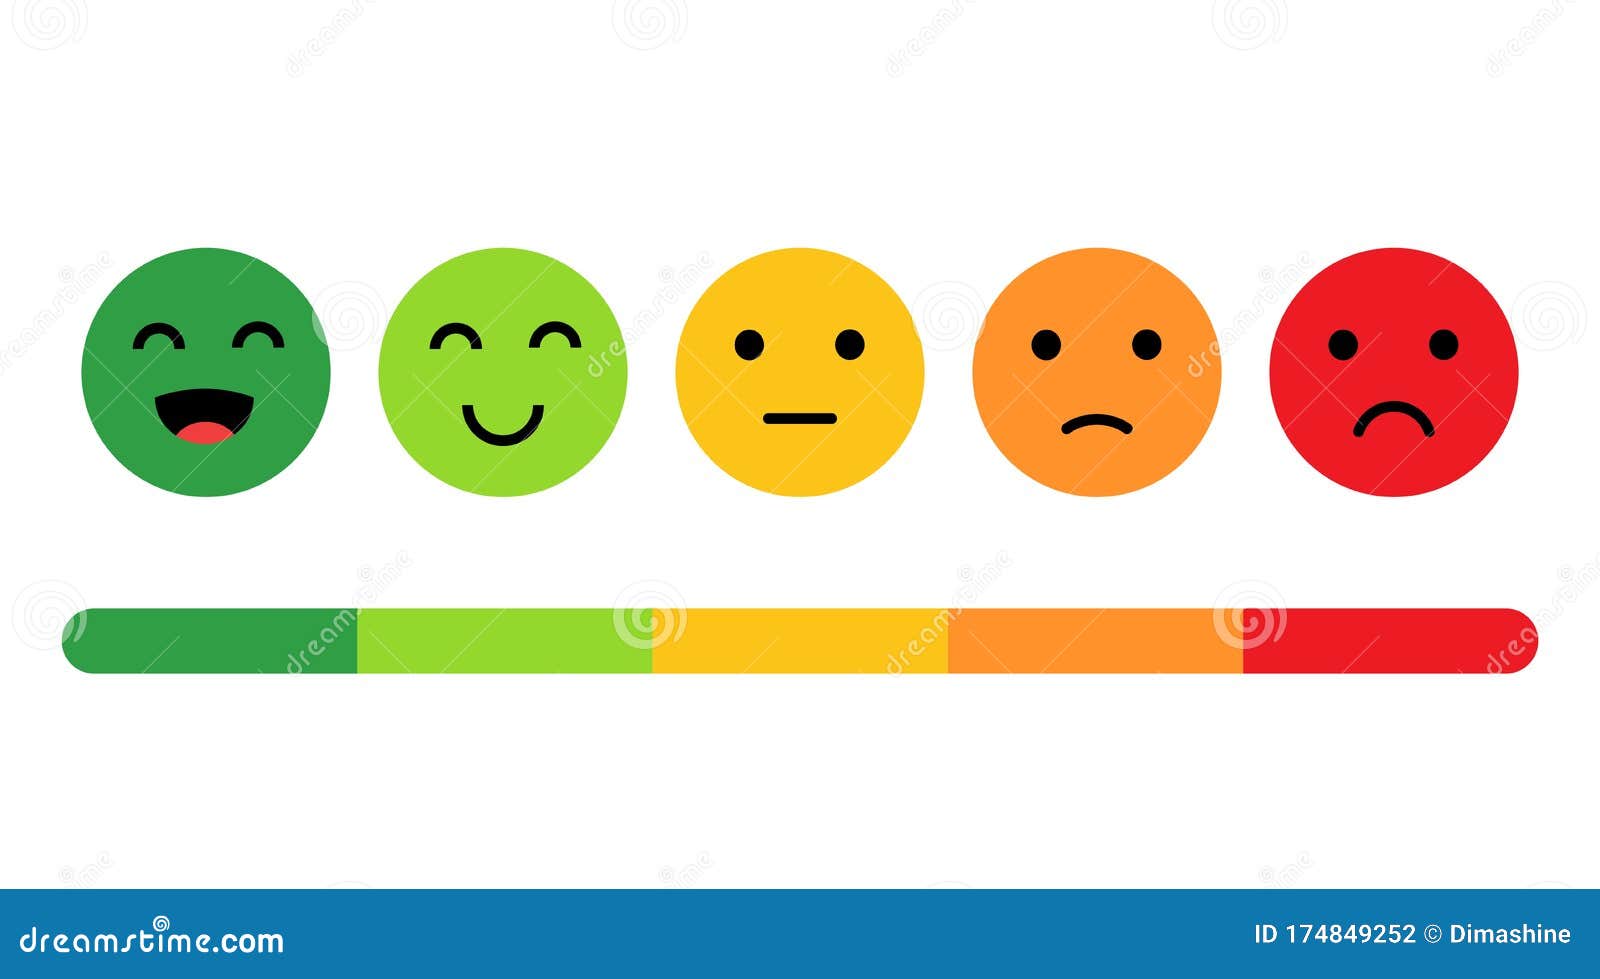 Emoji Rating Scale